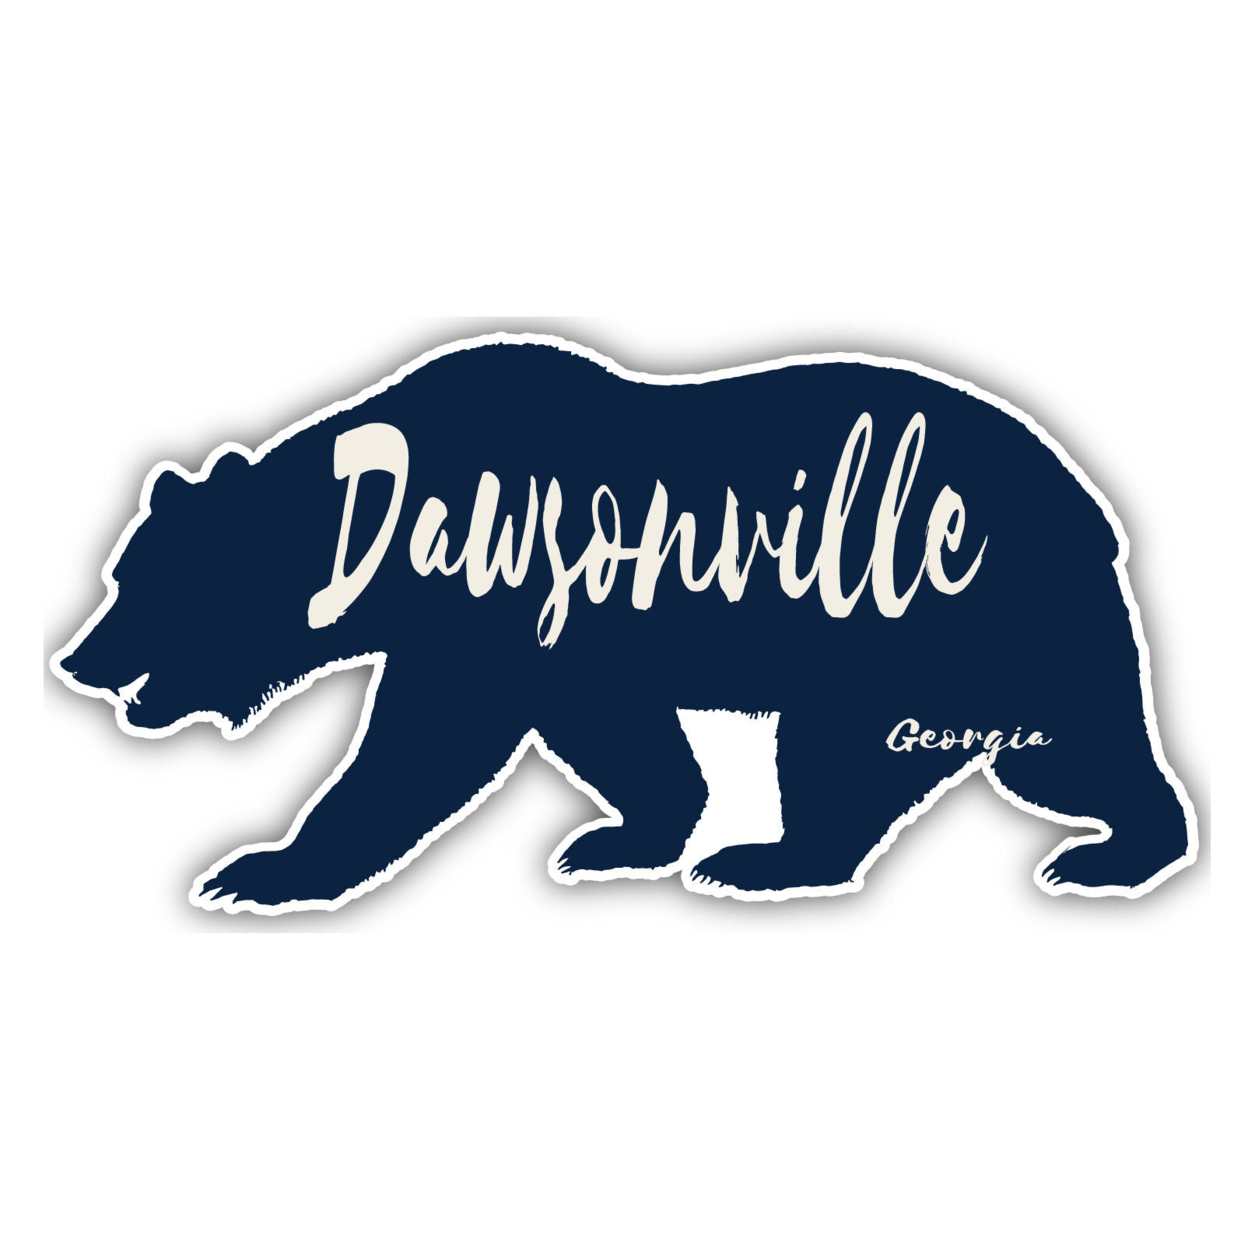 Dawsonville Georgia Souvenir Decorative Stickers (Choose Theme And Size) - Single Unit, 6-Inch, Great Outdoors